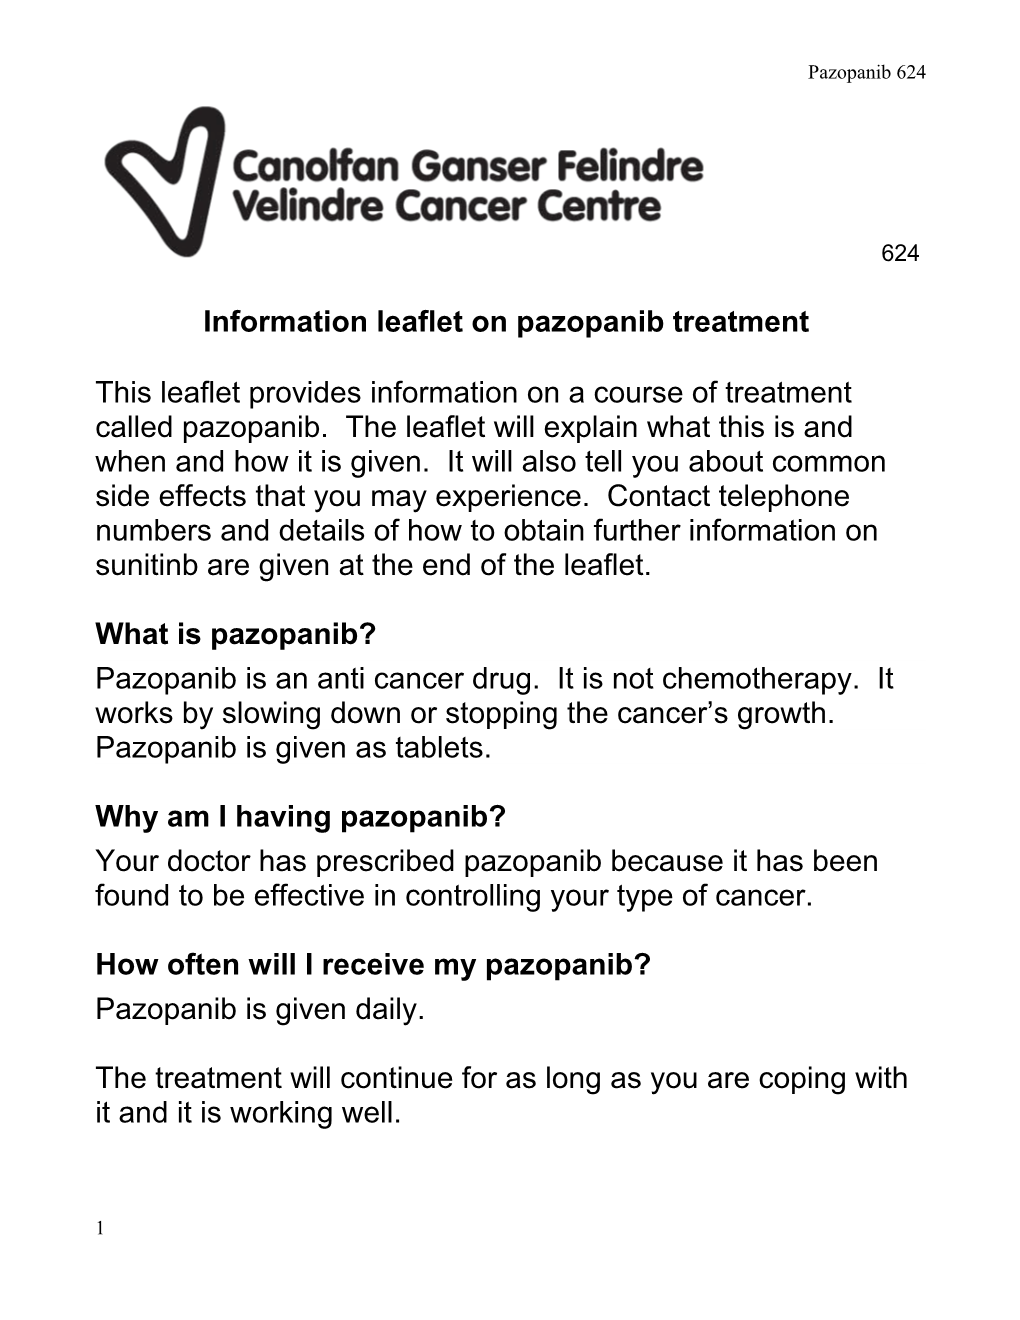 Information Leaflet on Pazopanib Treatment